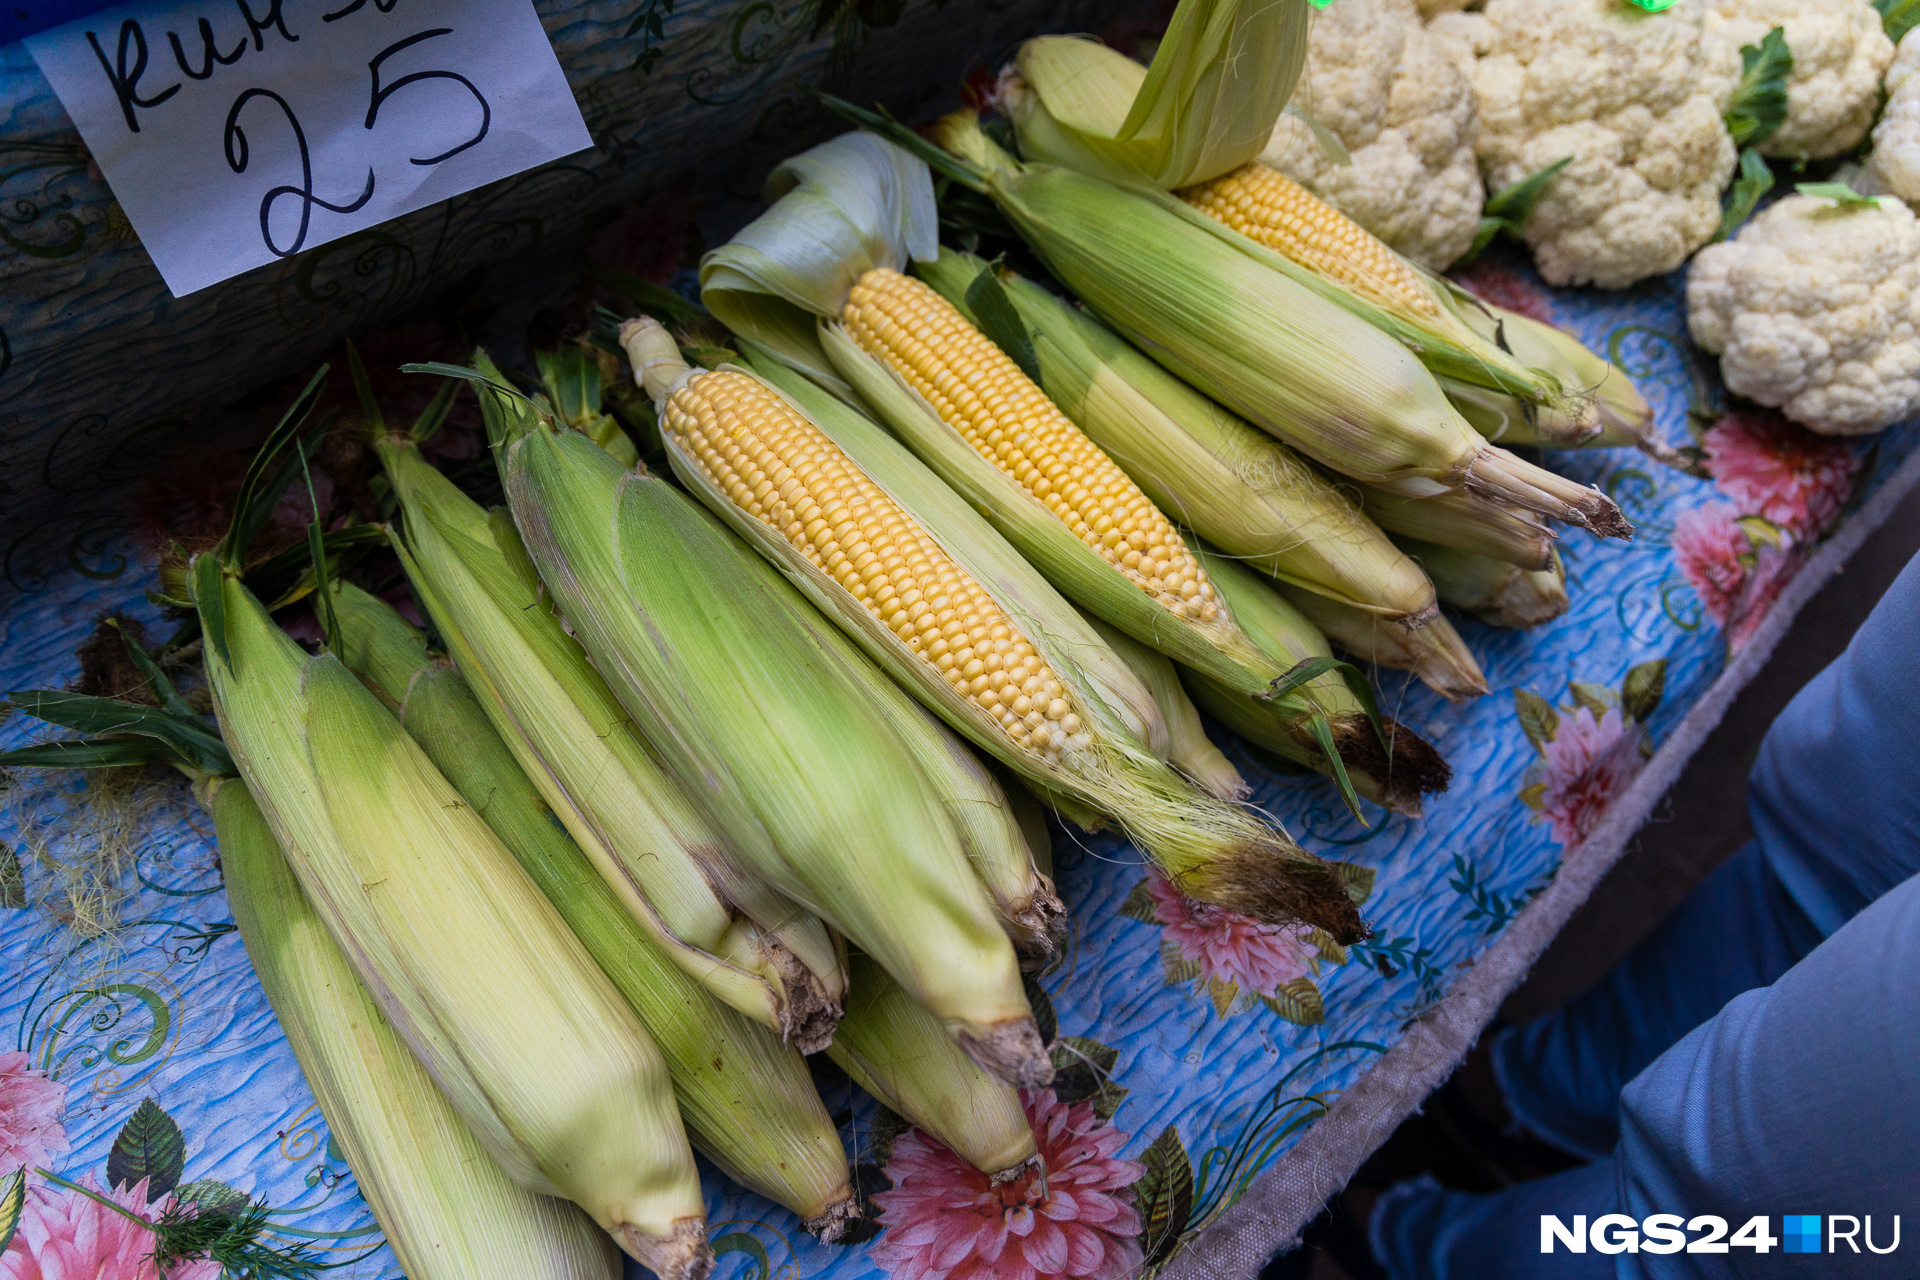 Овощи на рынке впечатляют размерами. Кукурузу продают по 45 рублей за початок